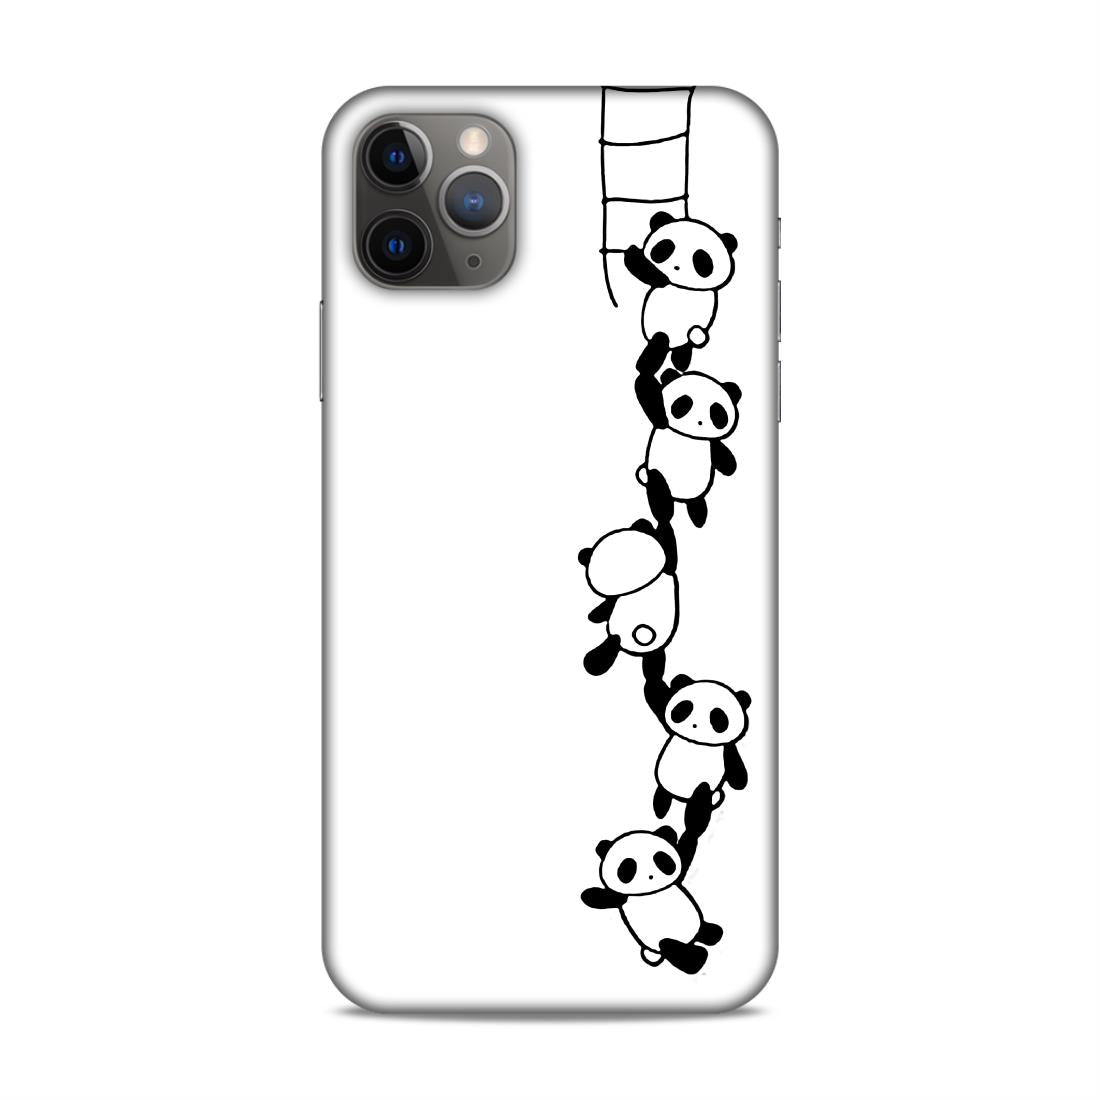 Panda Hard Back Case For Apple iPhone 11 Pro Max